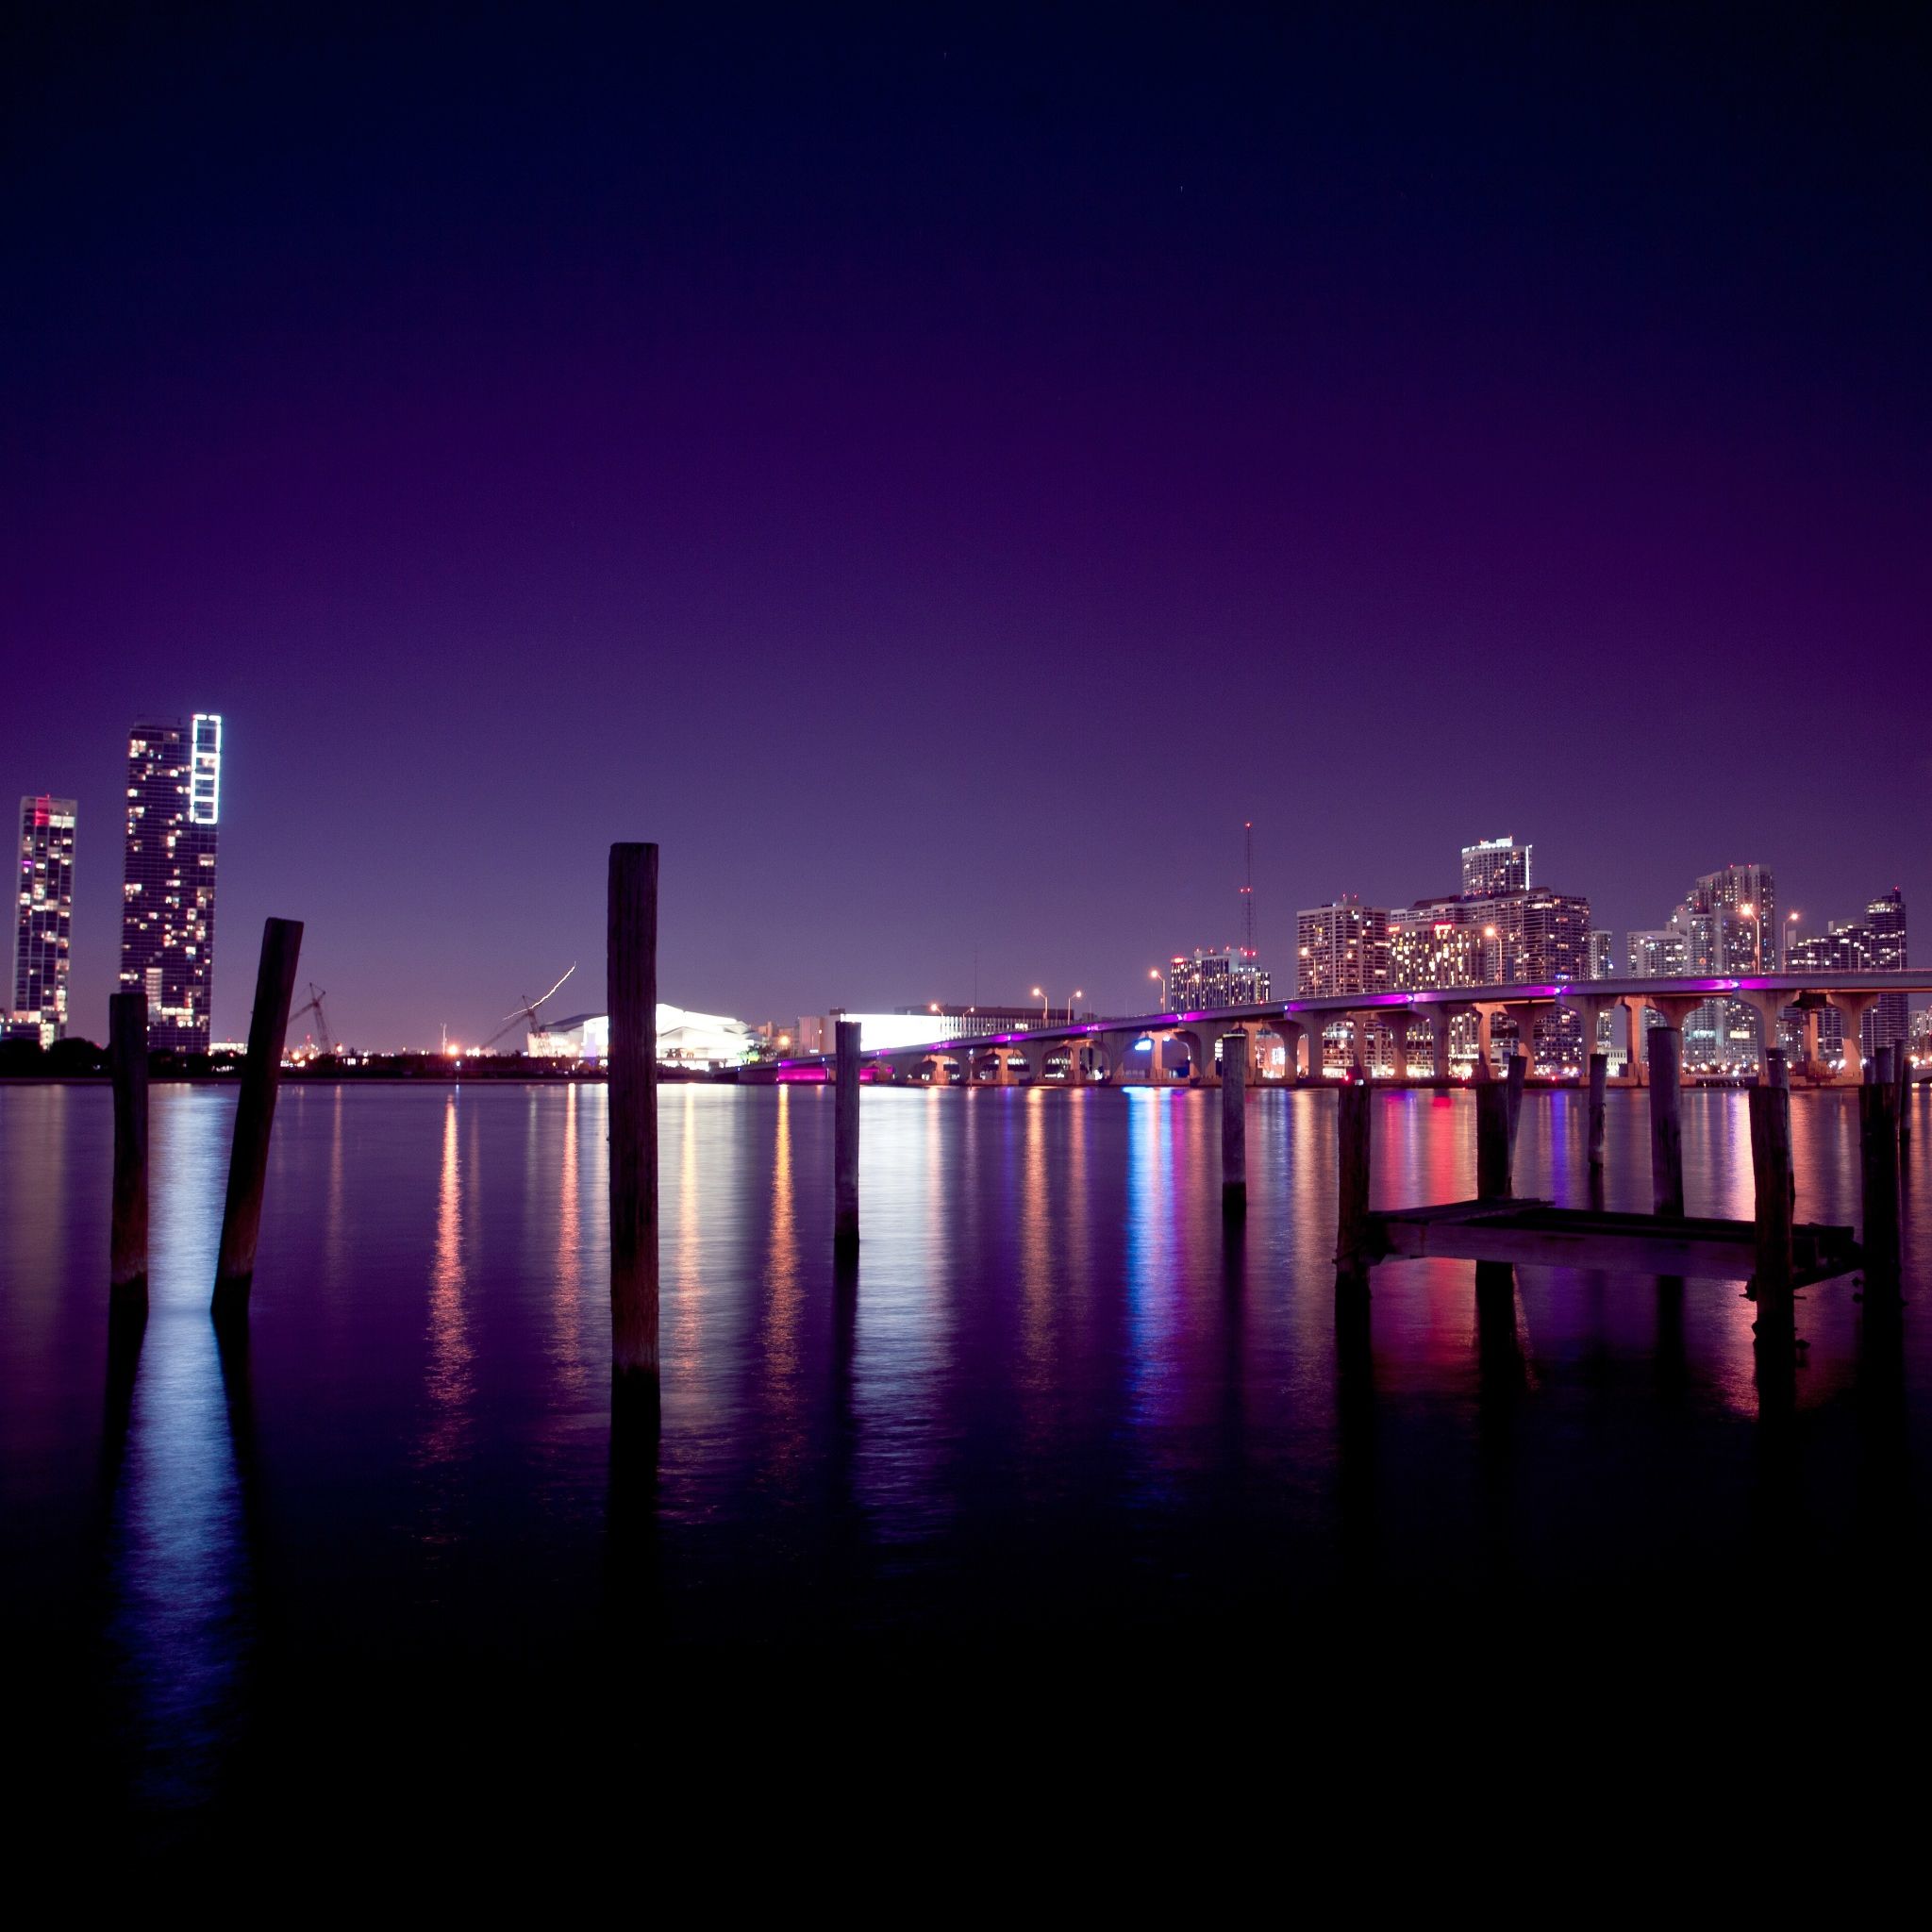 Waterfront City Night Scene iPad Air Wallpaper Free Download